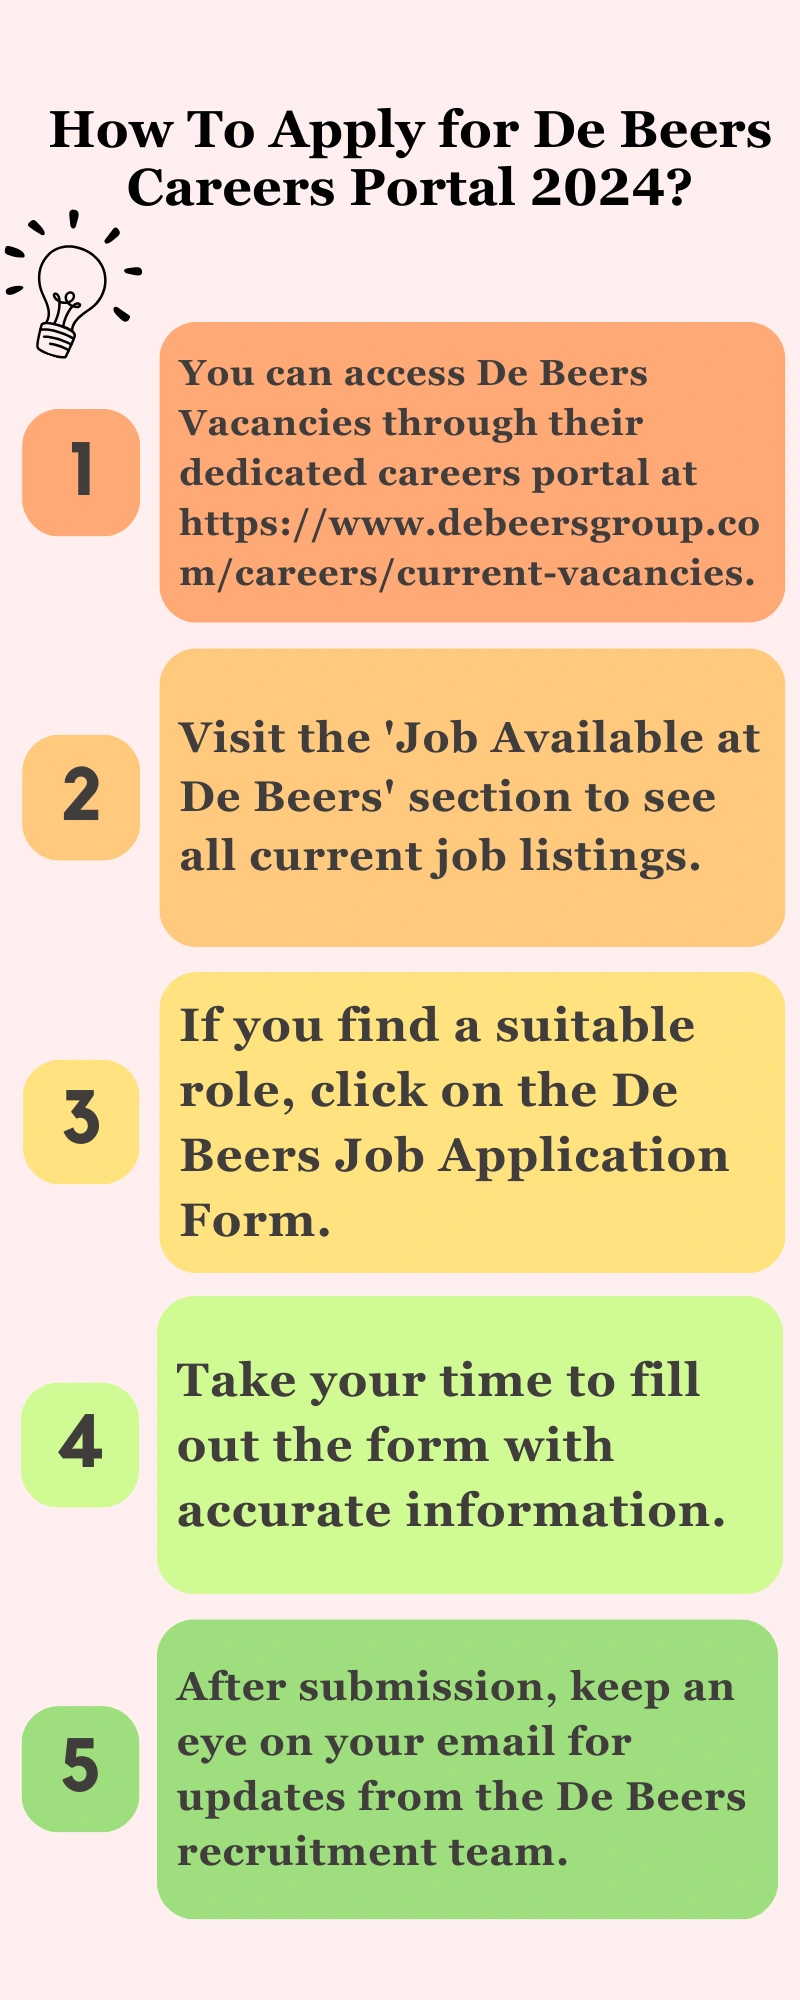 How To Apply for De Beers Careers Portal 2024?